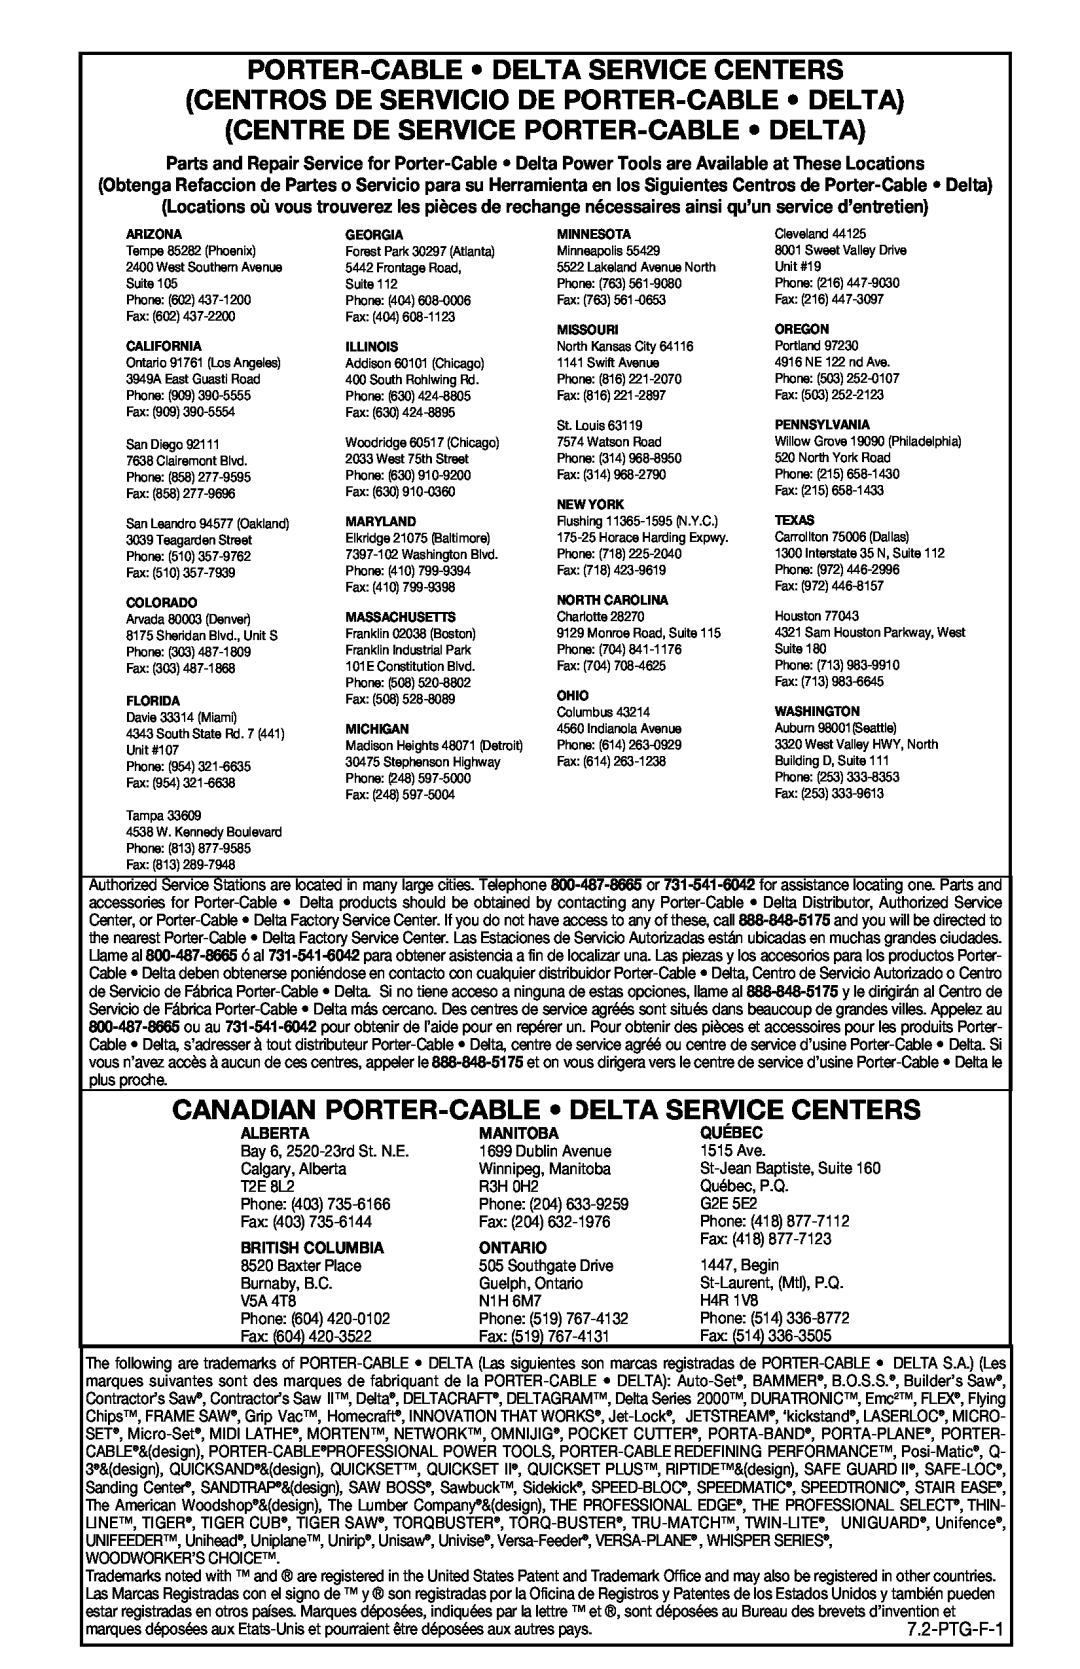 Porter-Cable 7814 Porter-Cable Delta Service Centers, Centros De Servicio De Porter-Cable Delta, Alberta, Manitoba, Québec 